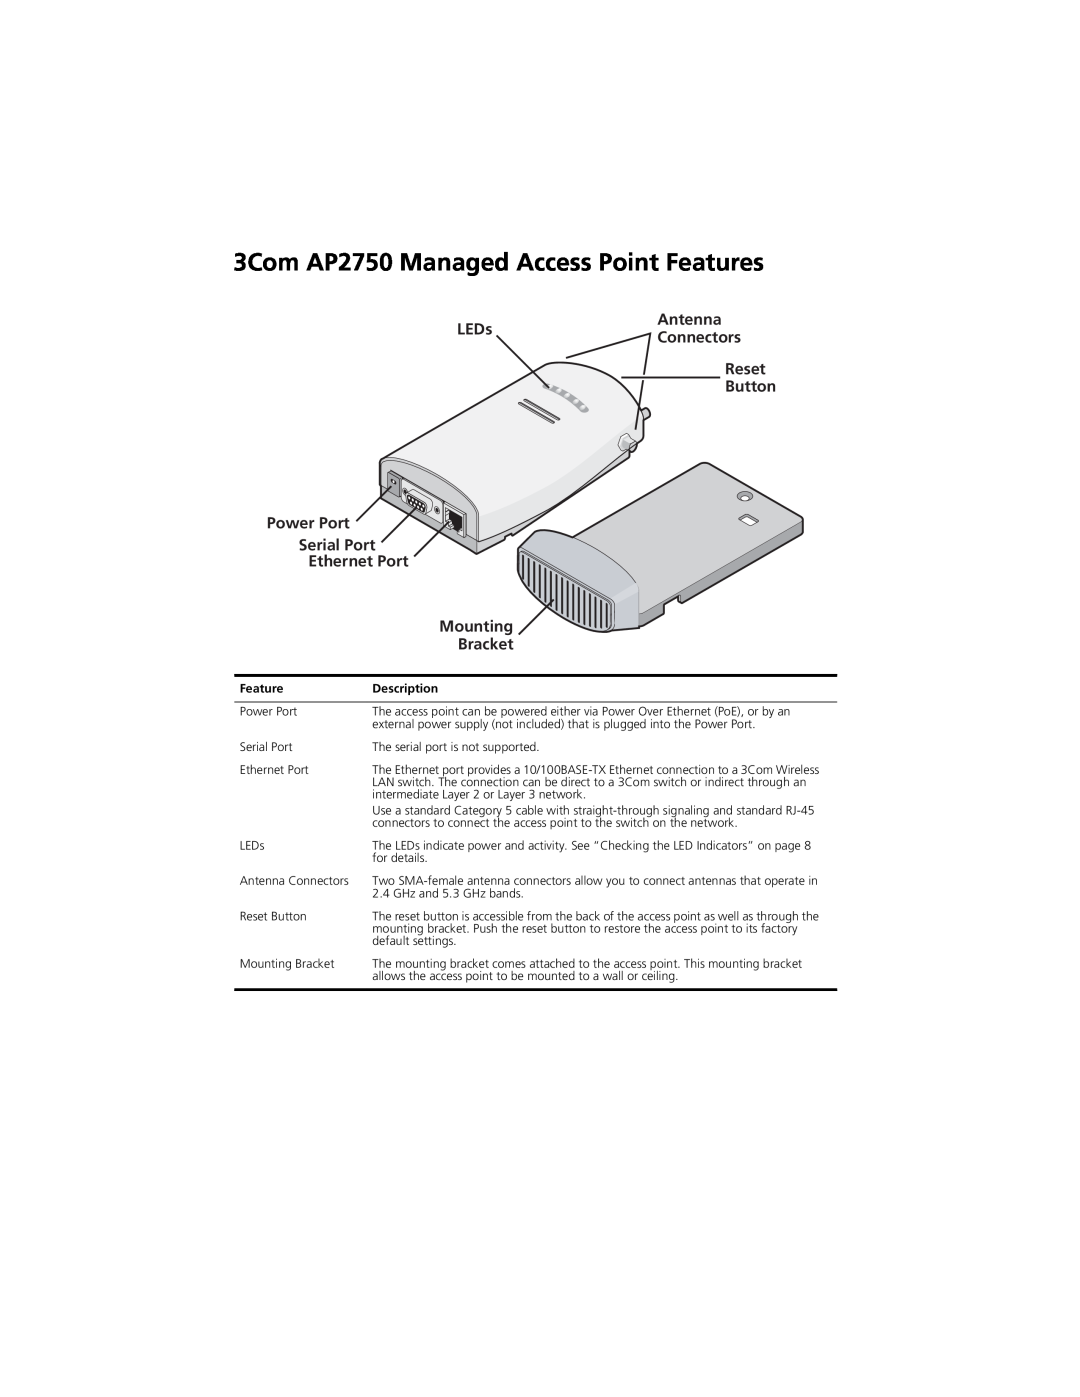 3Com 3Com AP2750 Managed Access Point Features, Antenna LEDsConnectors Reset Button Power Port Serial Port, Mounting 